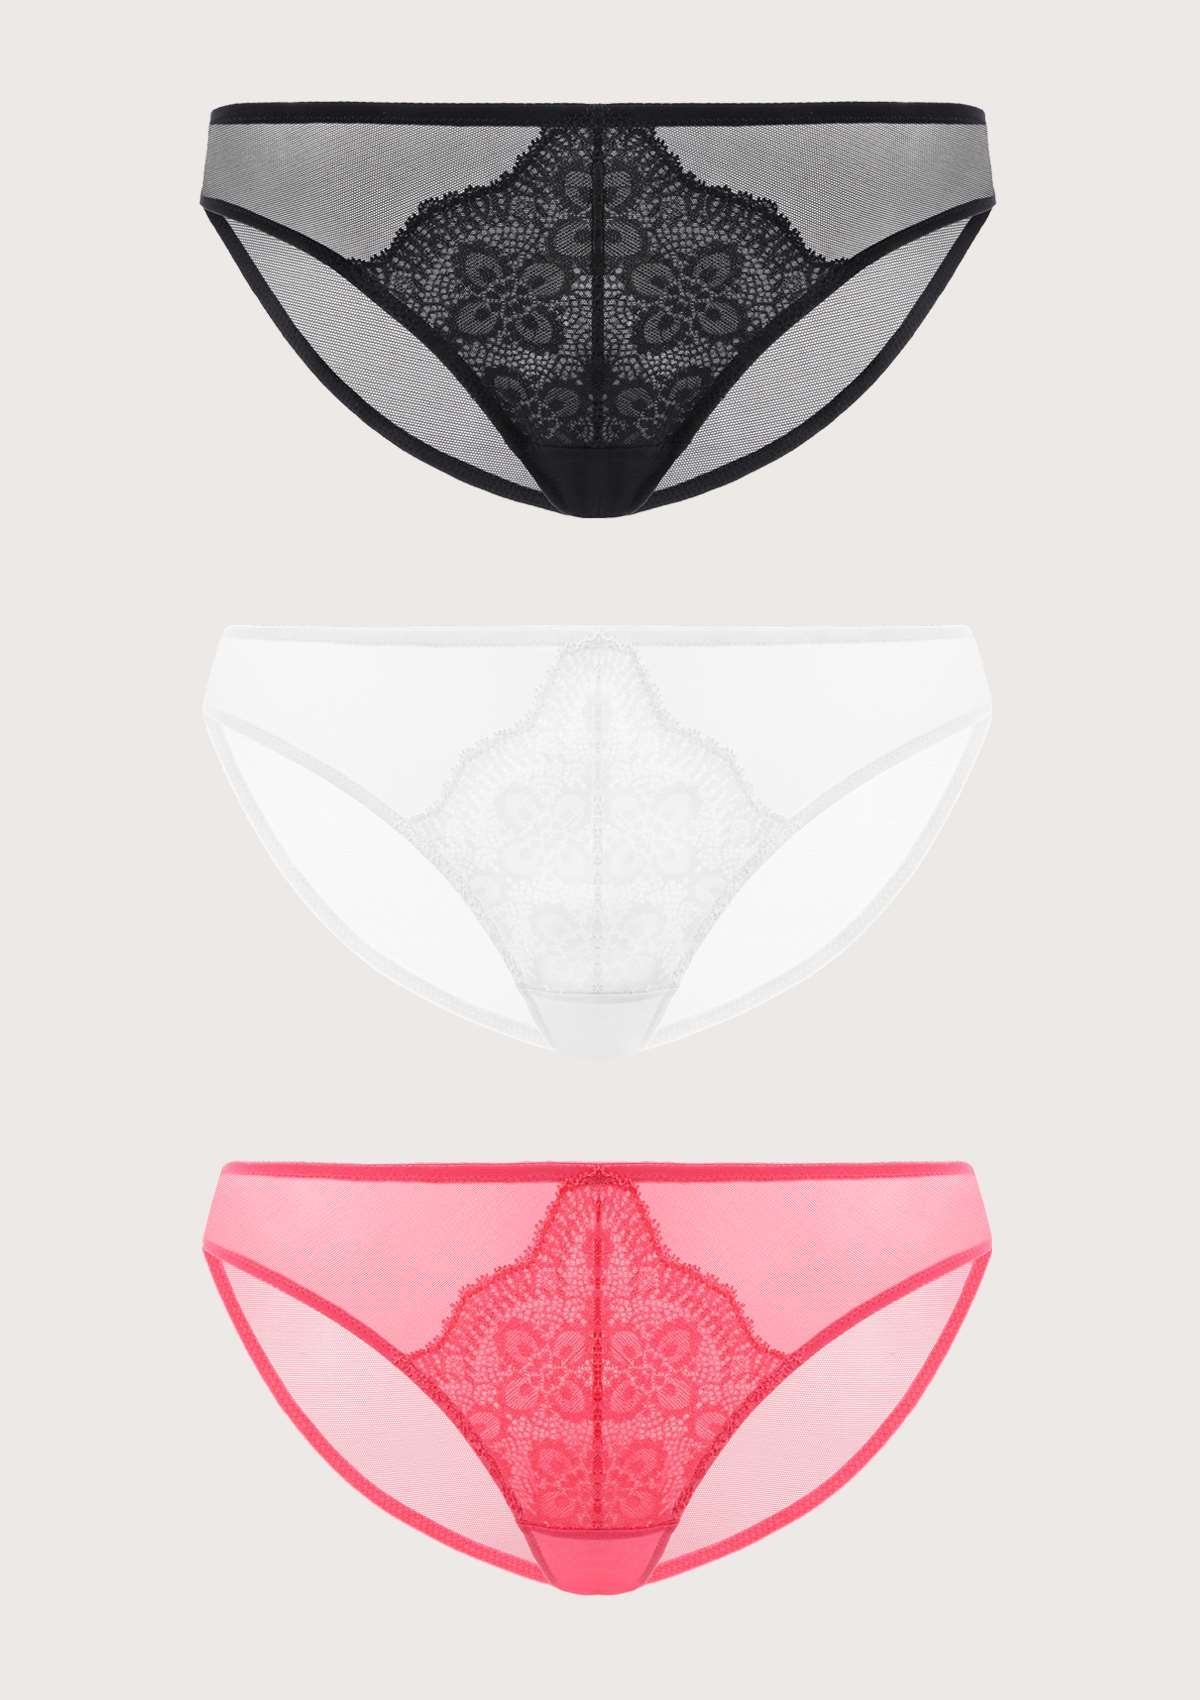 HSIA Front Flower Lace Bikini Underwear 3 Pack - L / Black+White+Pink